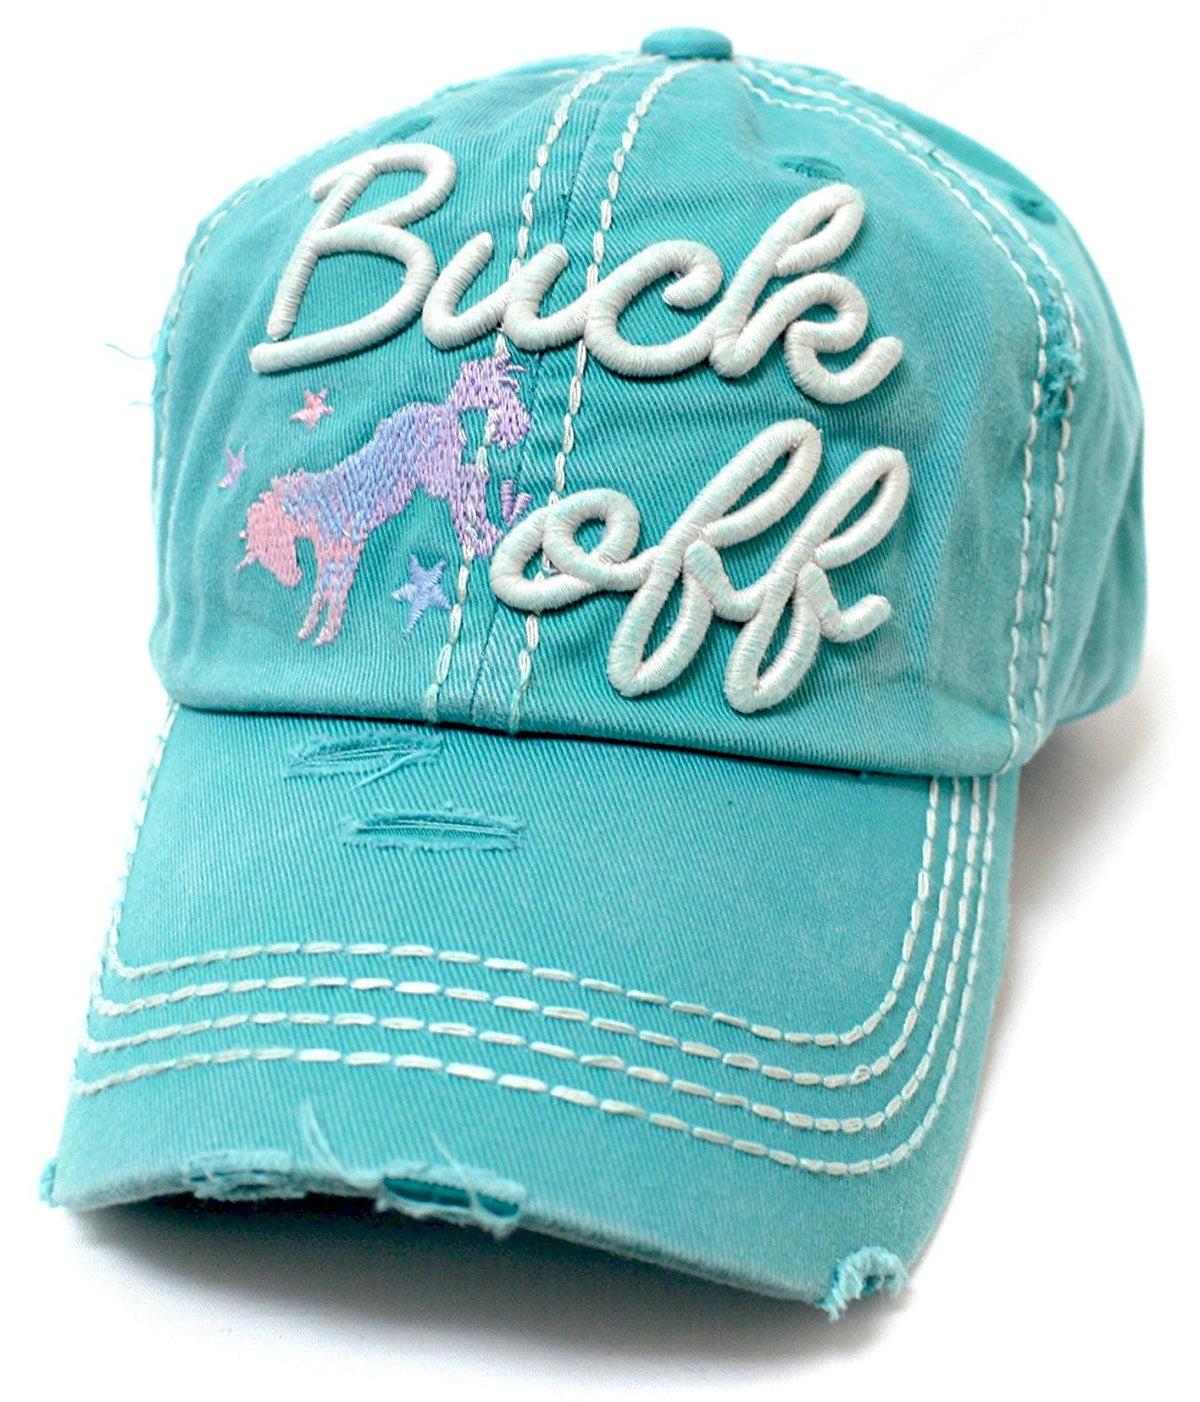 CAPS 'N VINTAGE Turquoise Buck Off Wild Horse Embroidery Baseball Cap - Caps 'N Vintage 